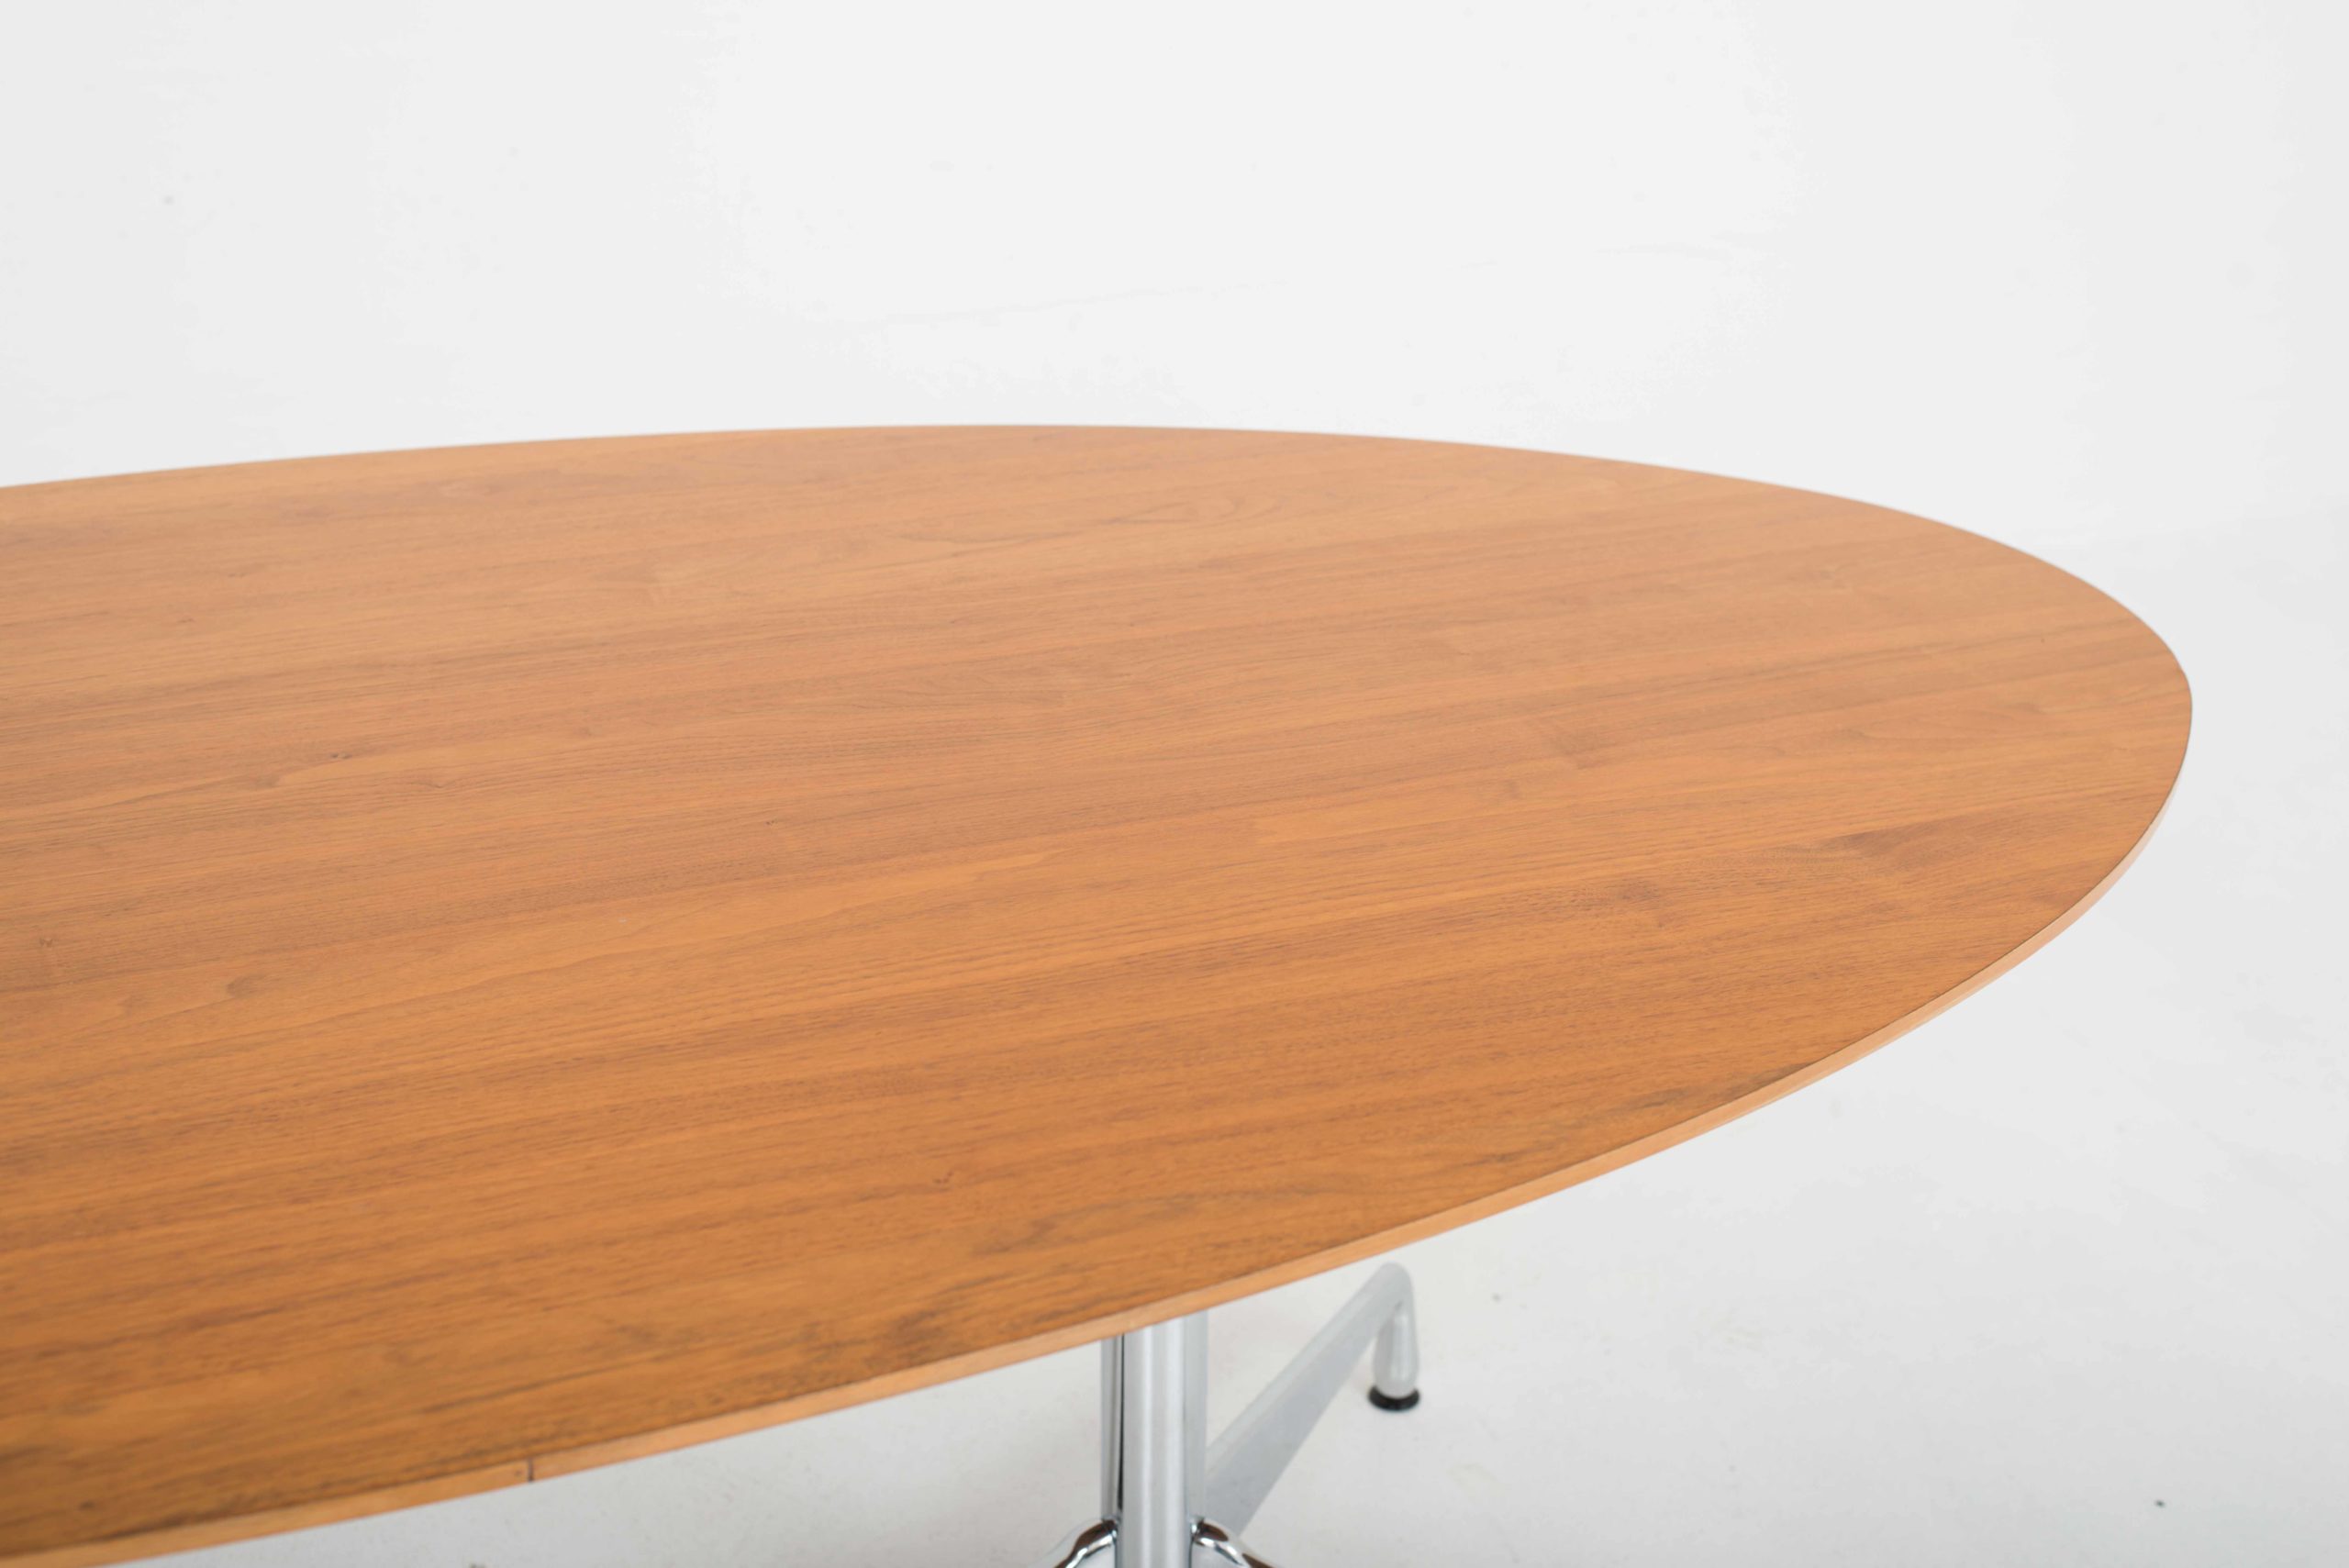 Vitra Segmented Table von Charles &amp; Ray Eames, 200x105cm-3